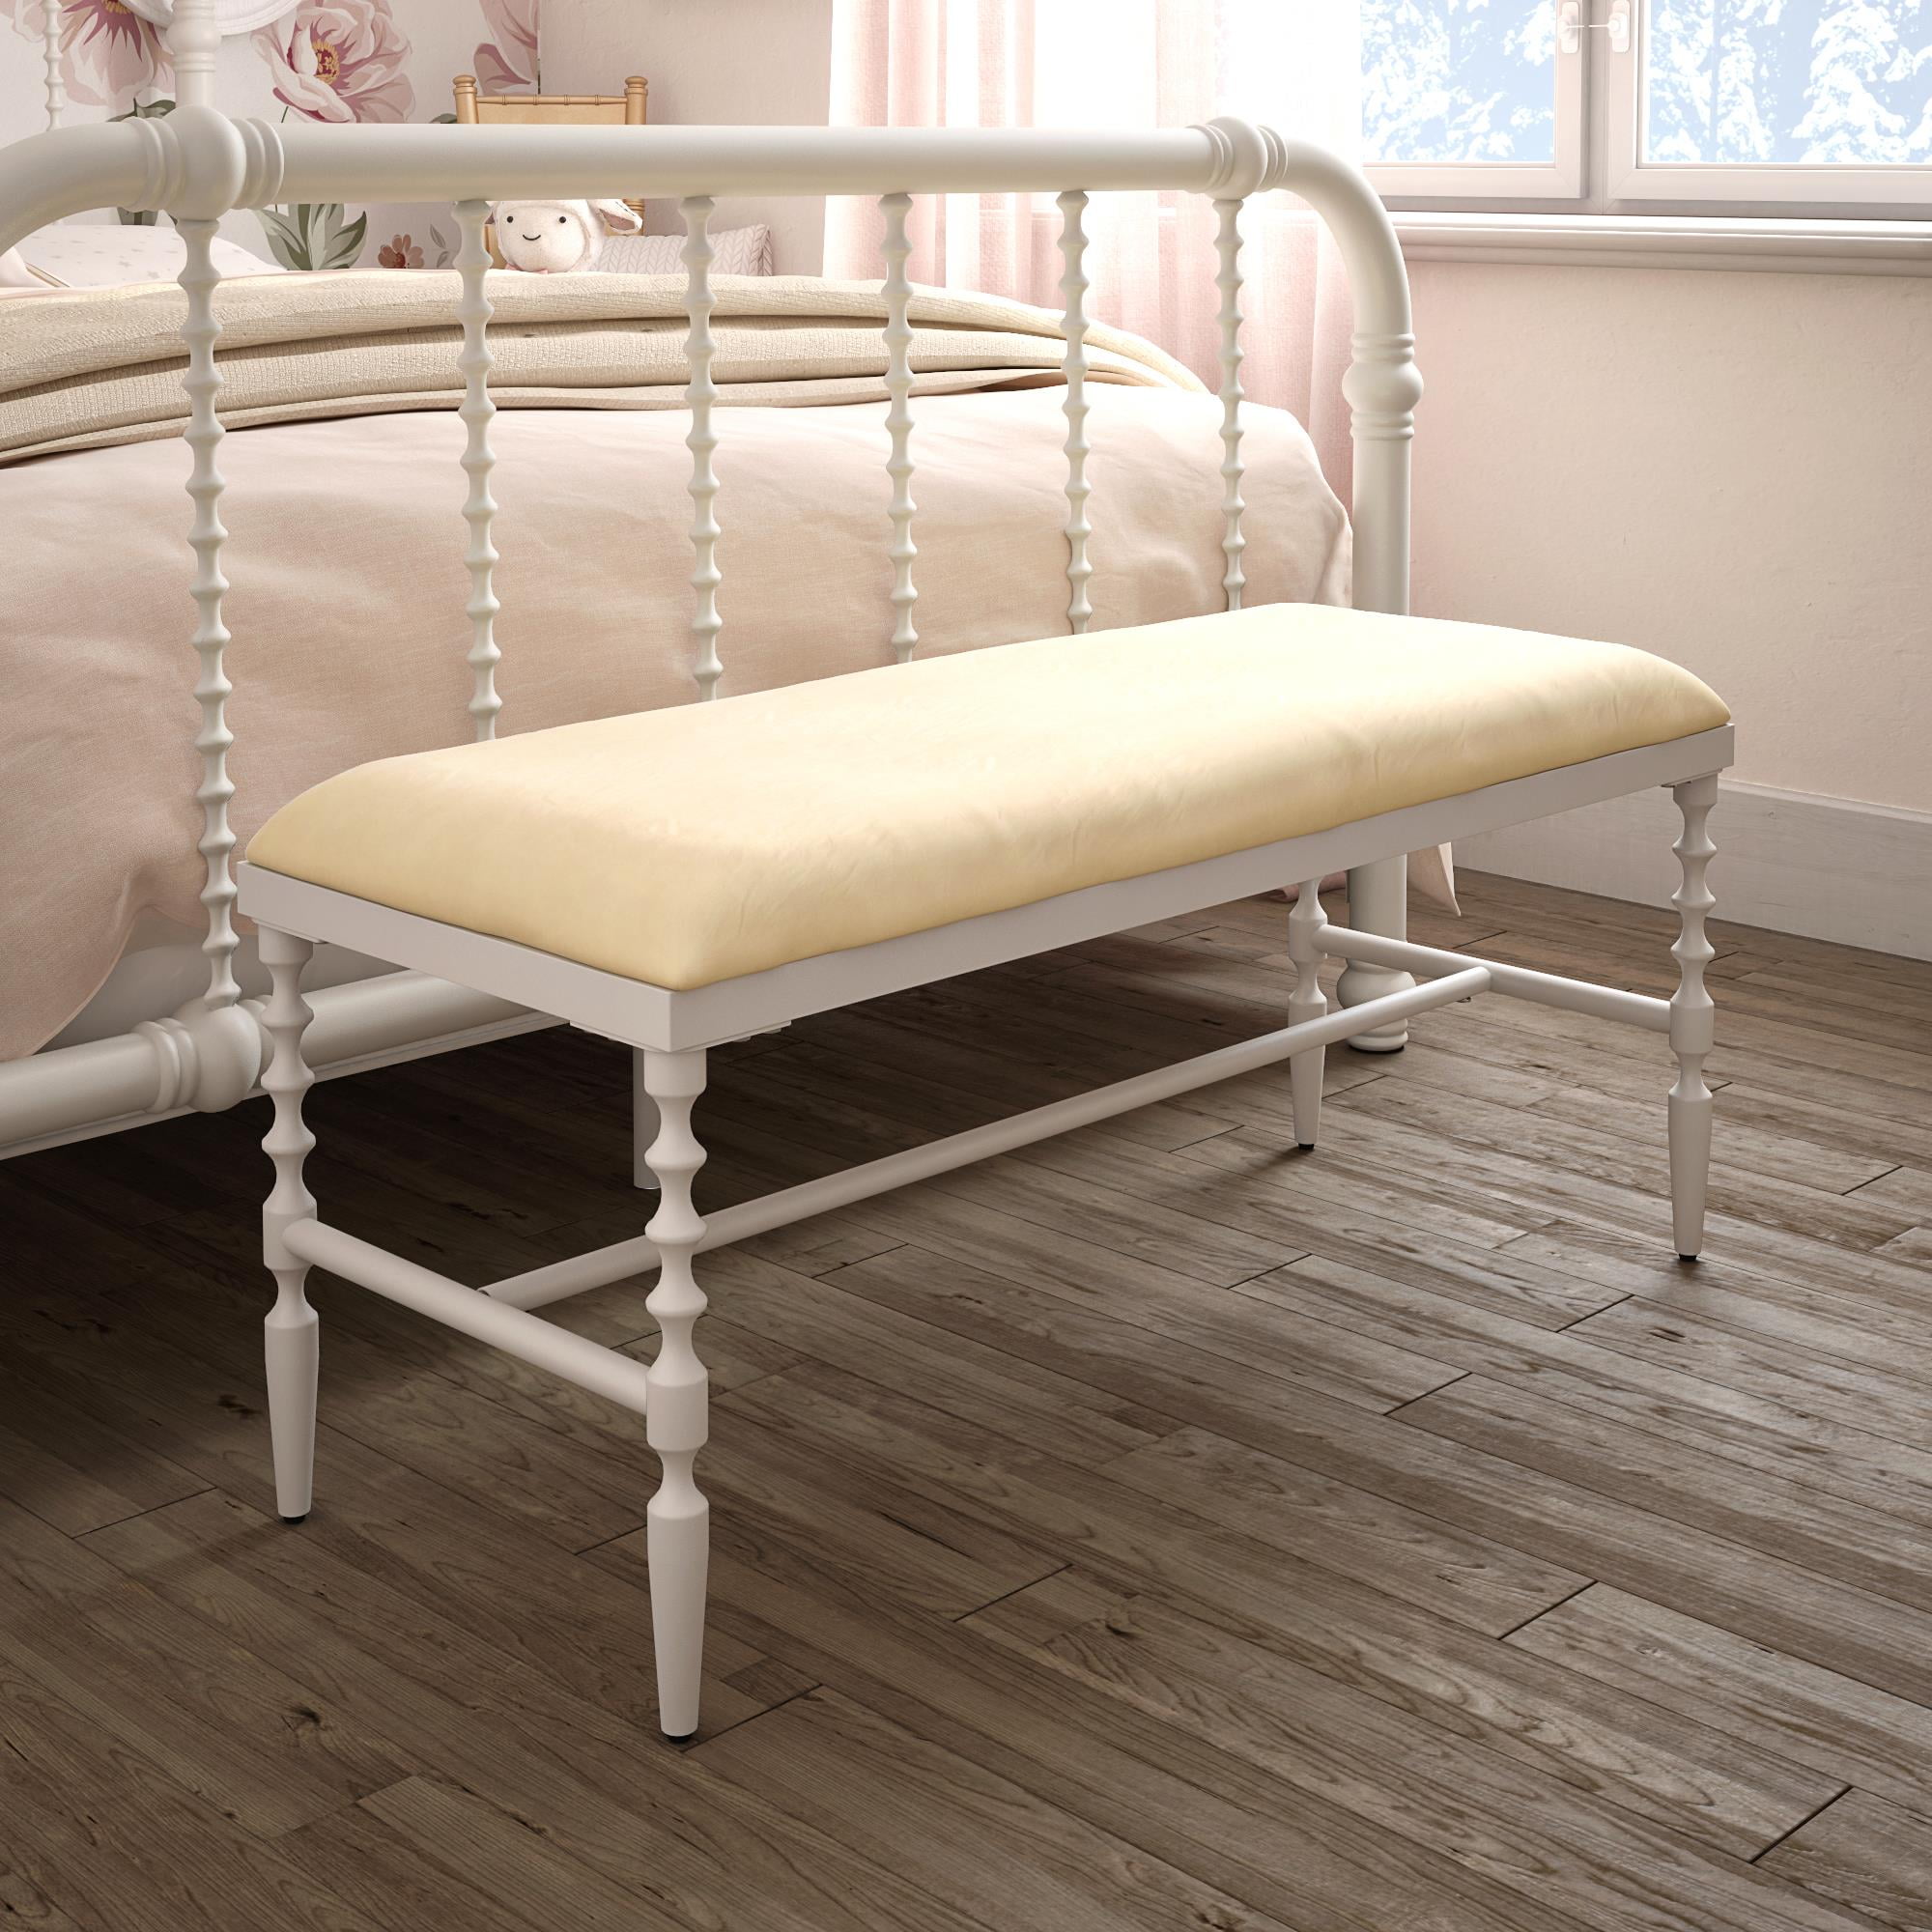 InRoom Furniture Designs White Finish Wood Jenny Lind Upholstered Bench